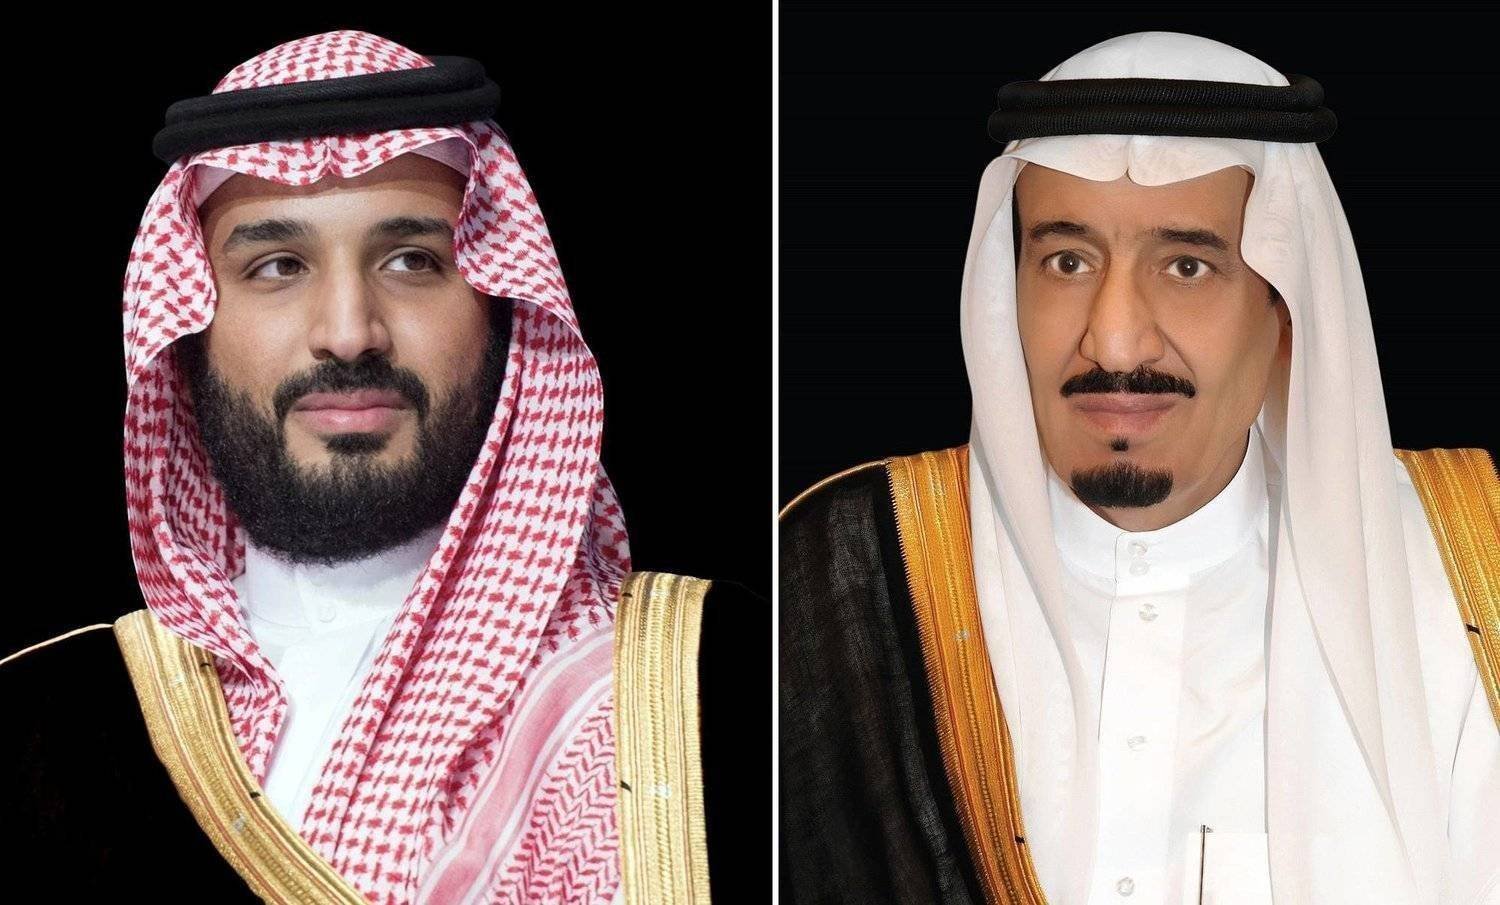 The Custodian of the Two Holy Mosques, King Salman bin Abdulaziz Al-Saud, and Prince Mohammed bin Salman bin Abdulaziz Al-Saud, Crown Prince and Prime Minister of Saudi Arabia. 